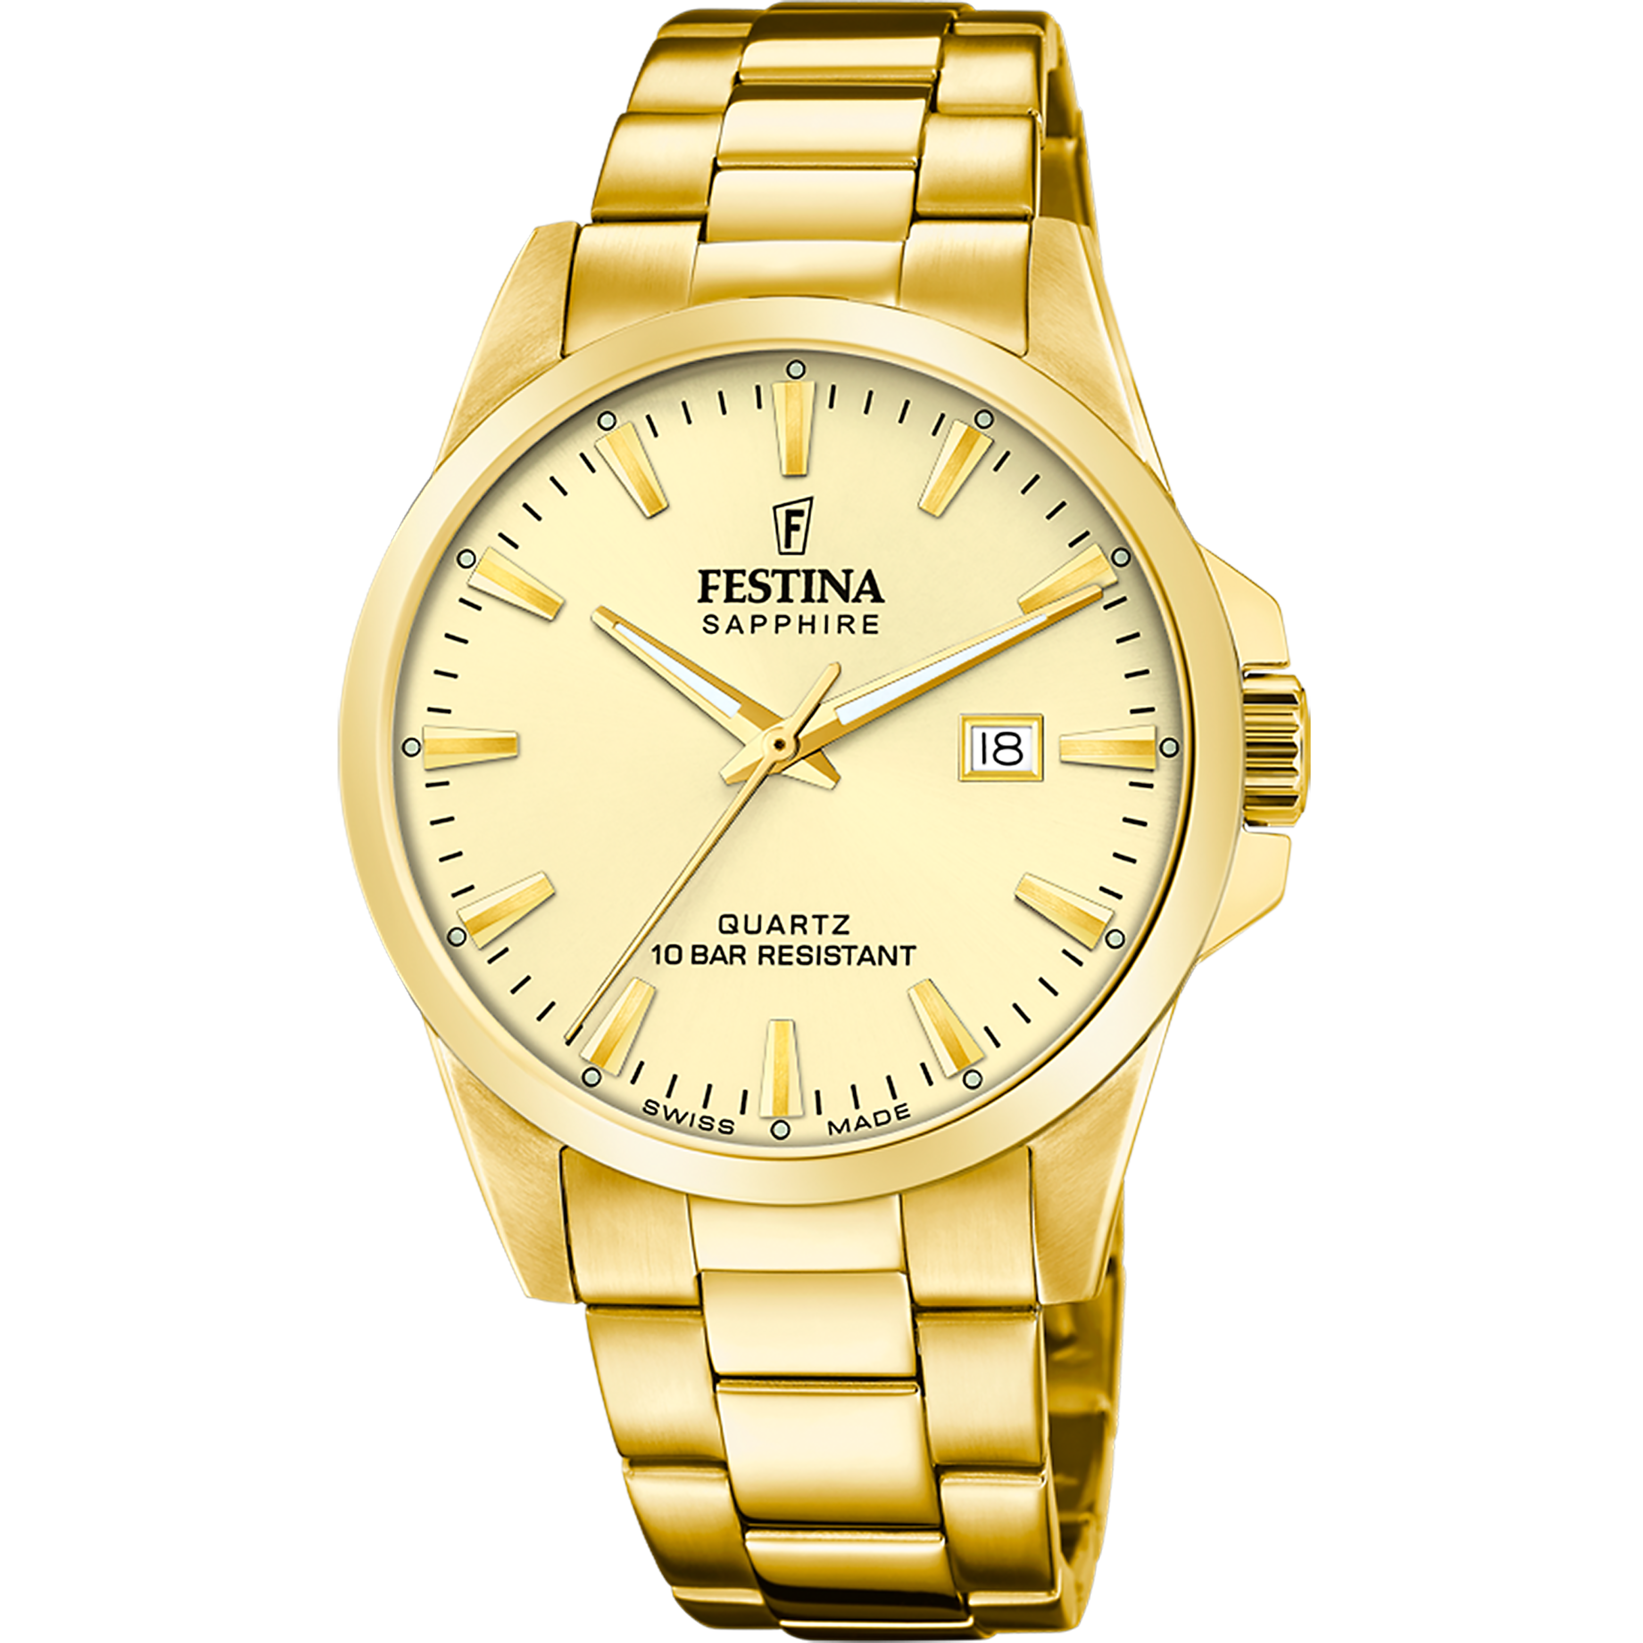 Festina Watch Repair - Watch Doctors